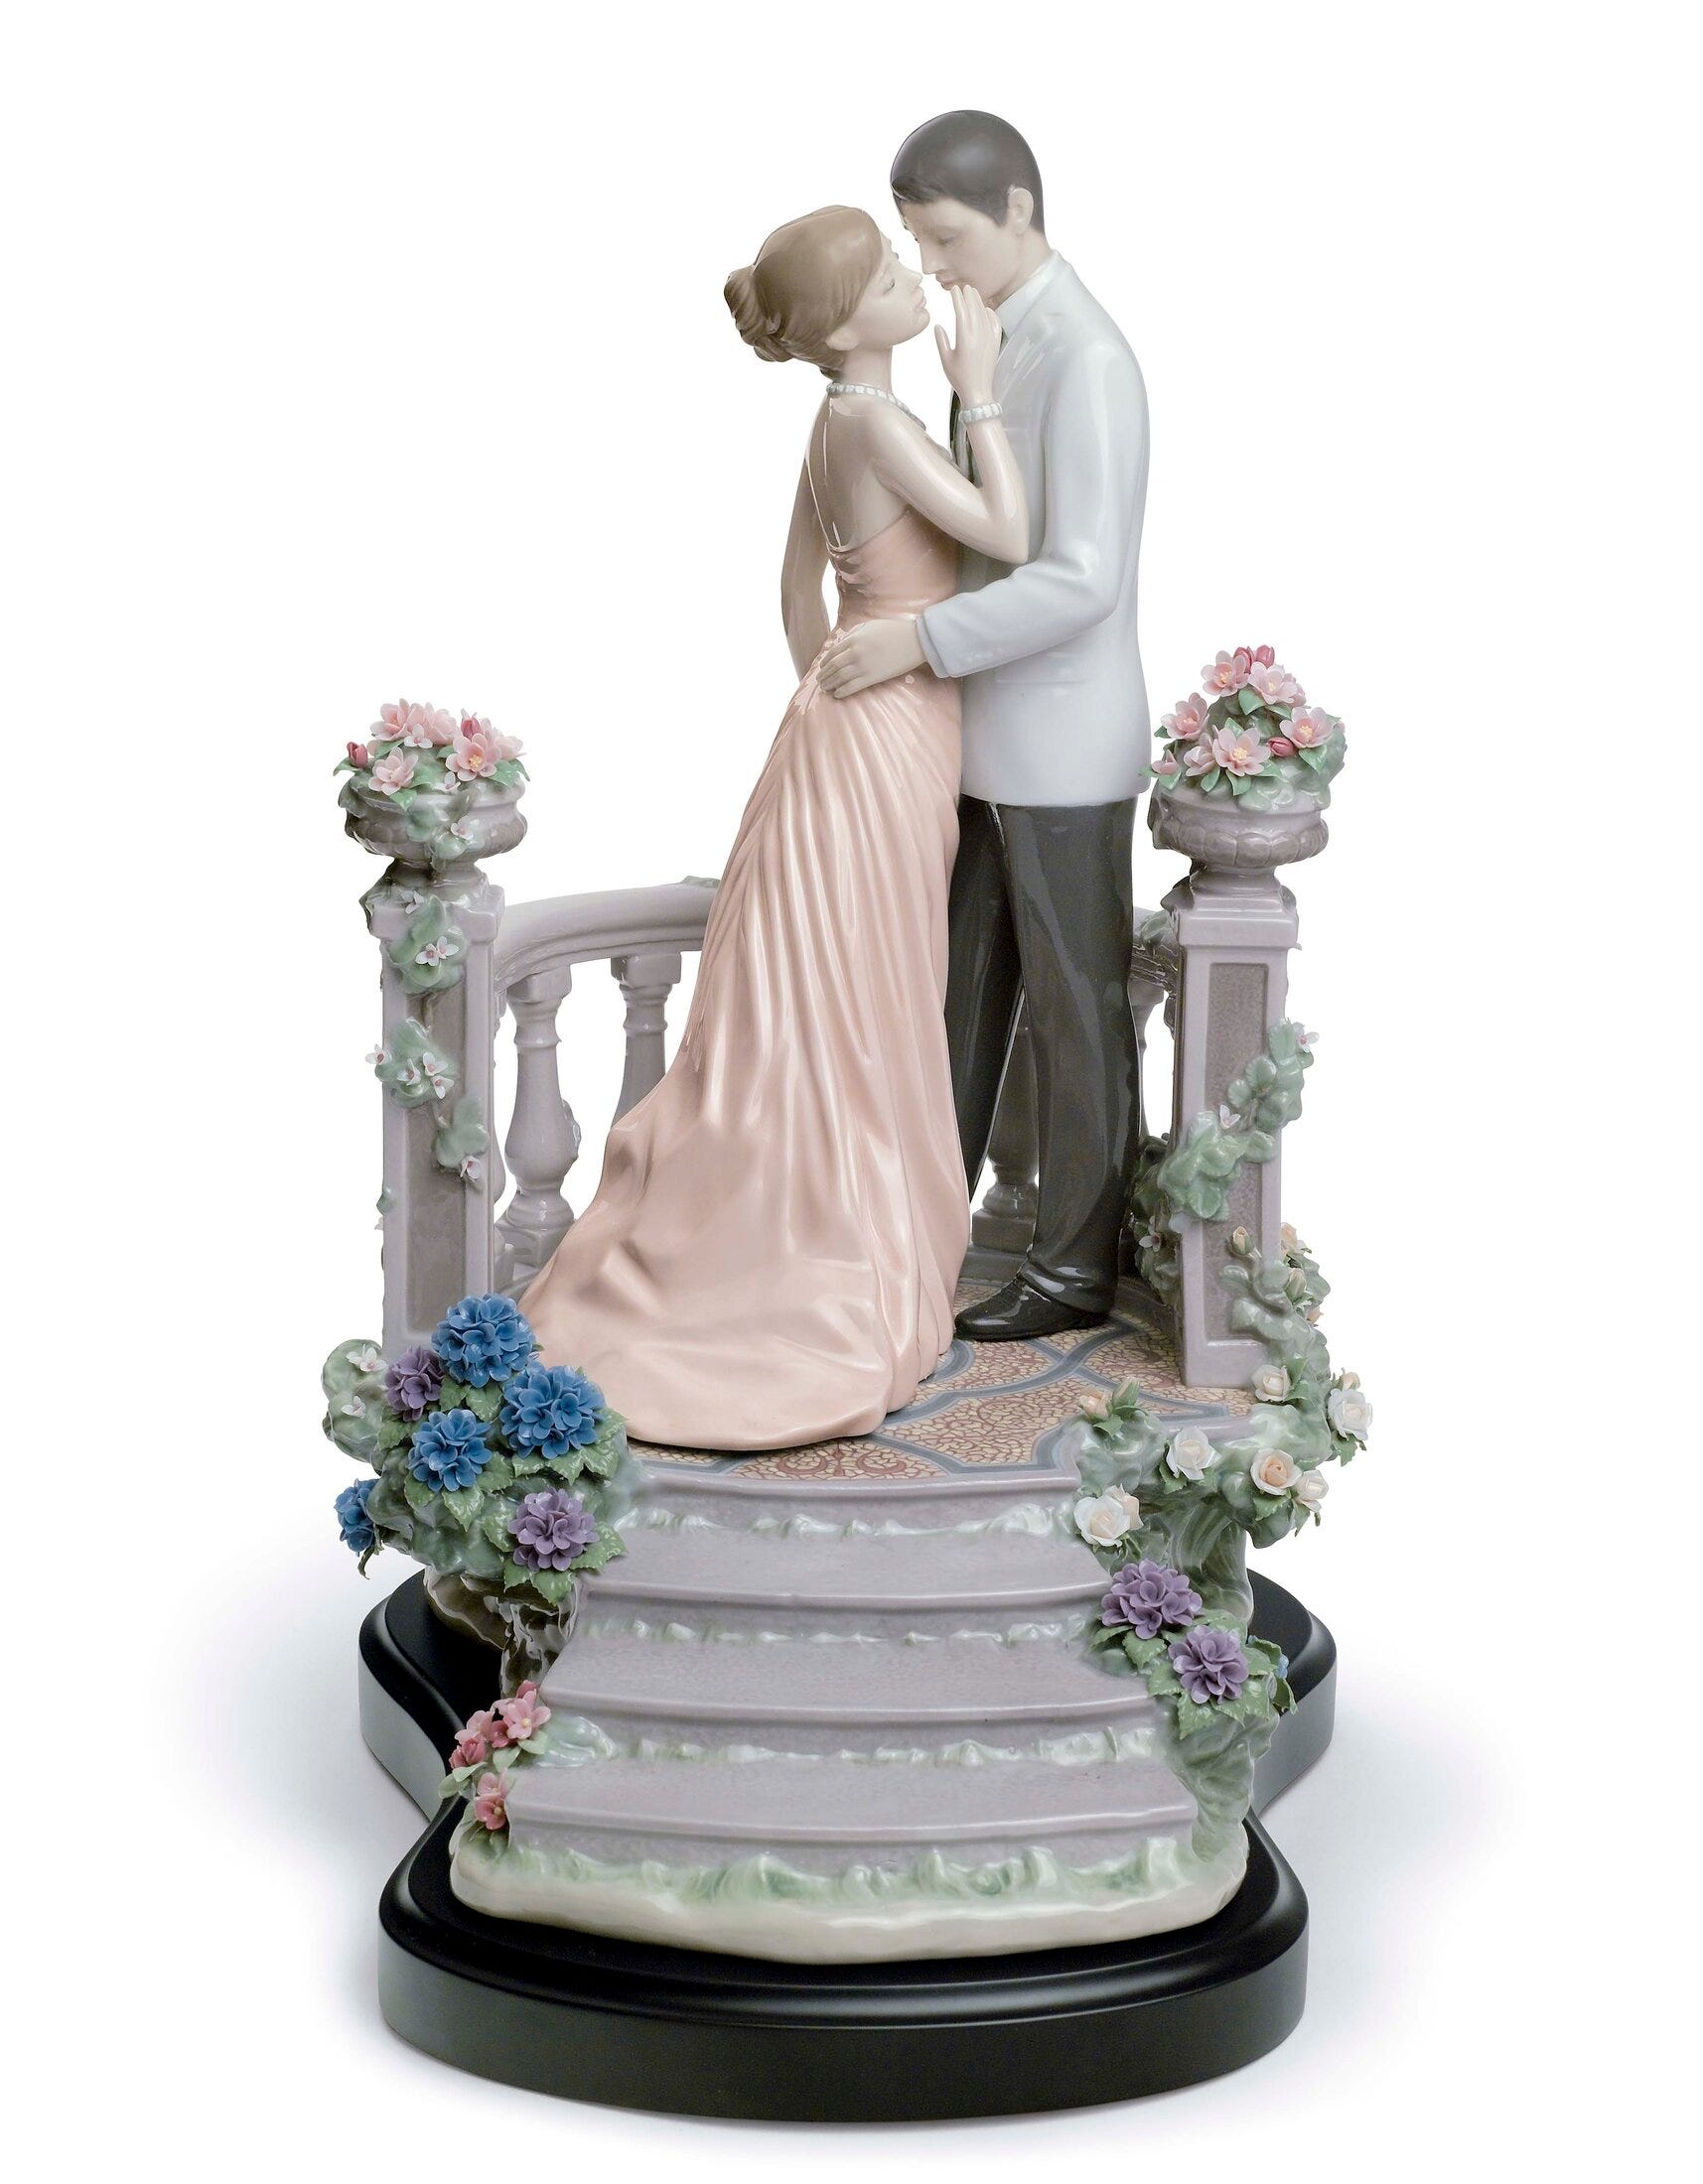 Moonlight Love Couple Figurine. Limited Edition